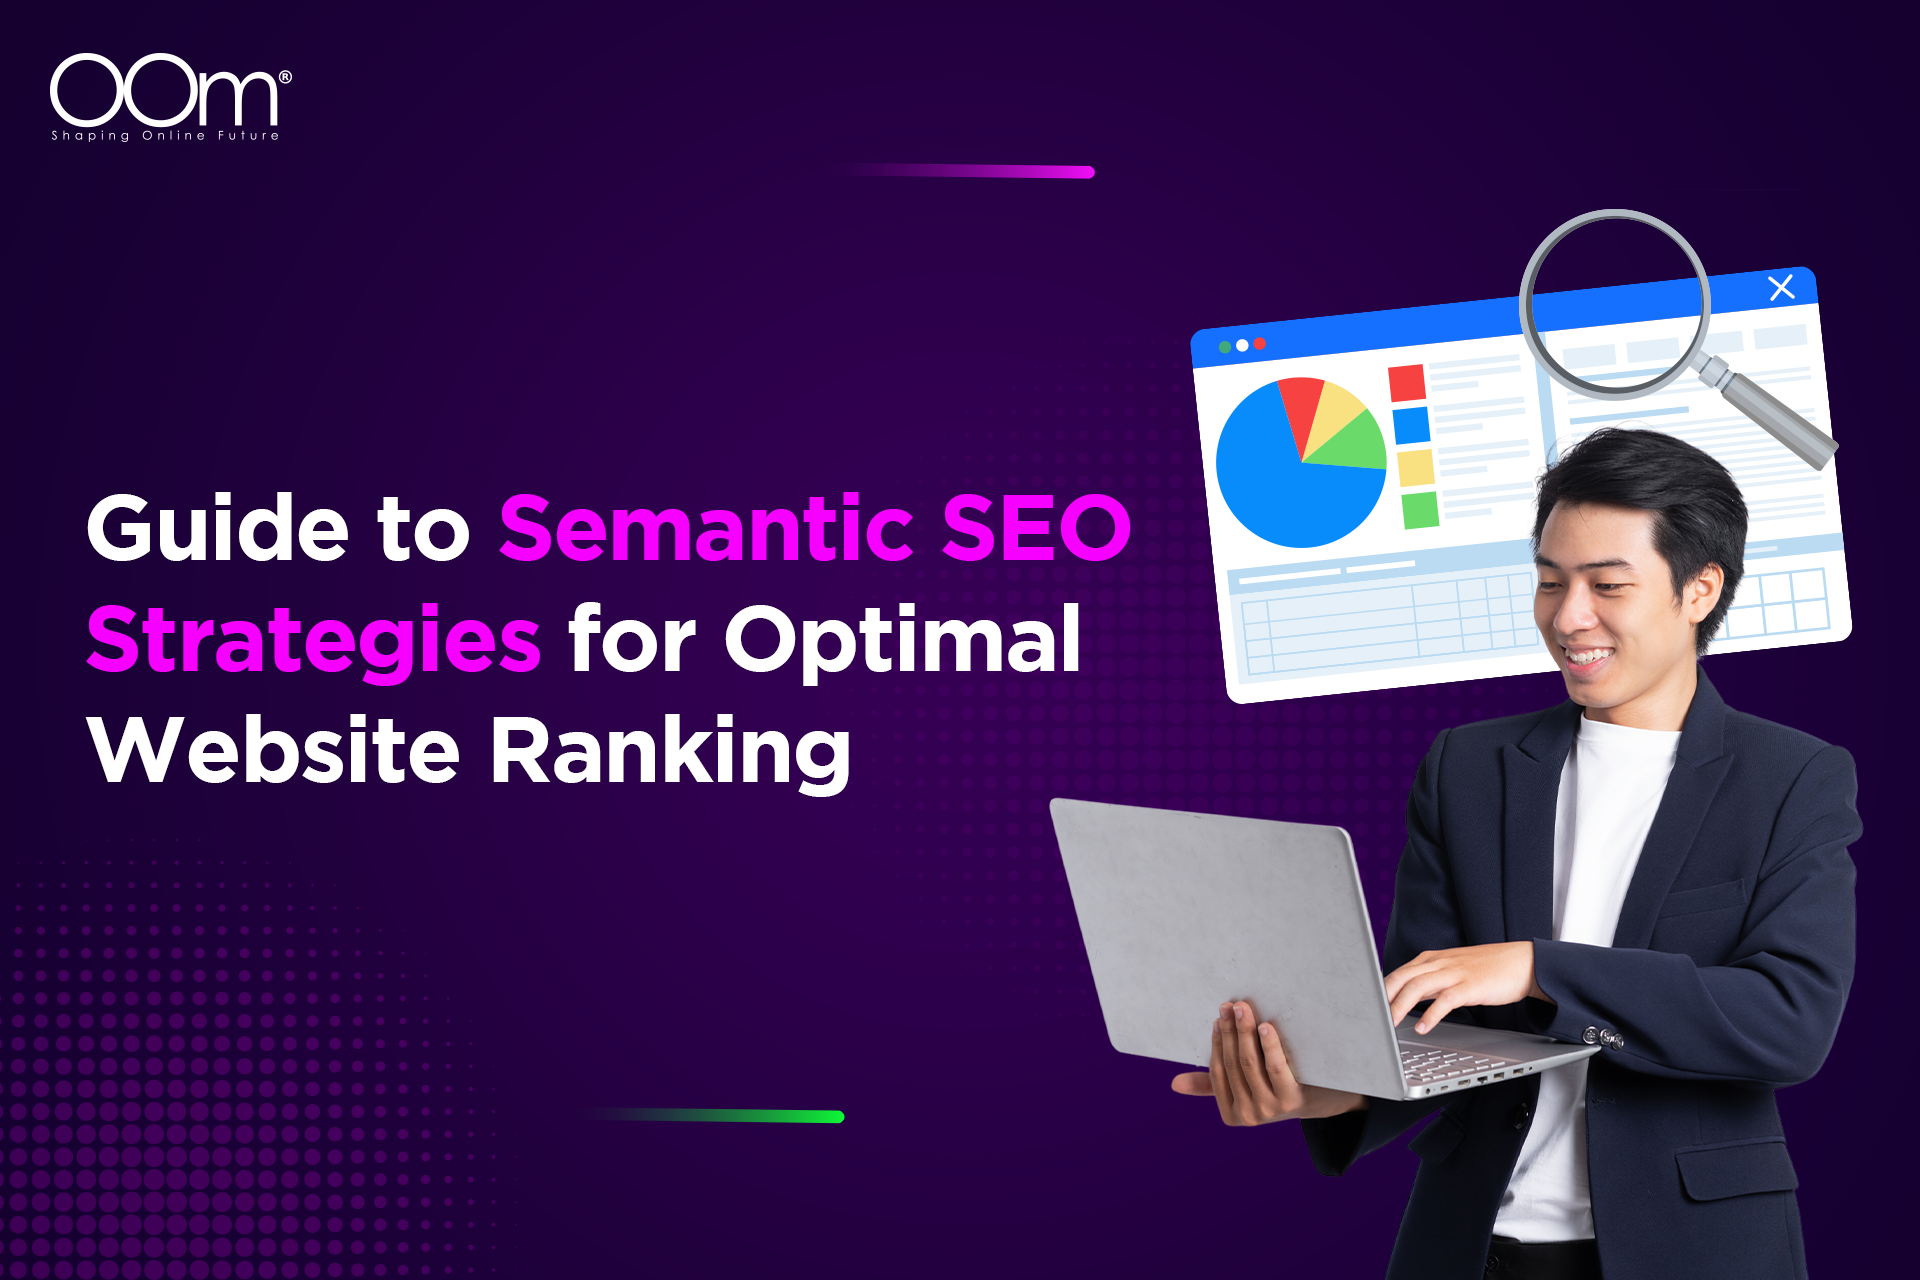 Guide to Semantic SEO Strategies for Optimal Website Ranking